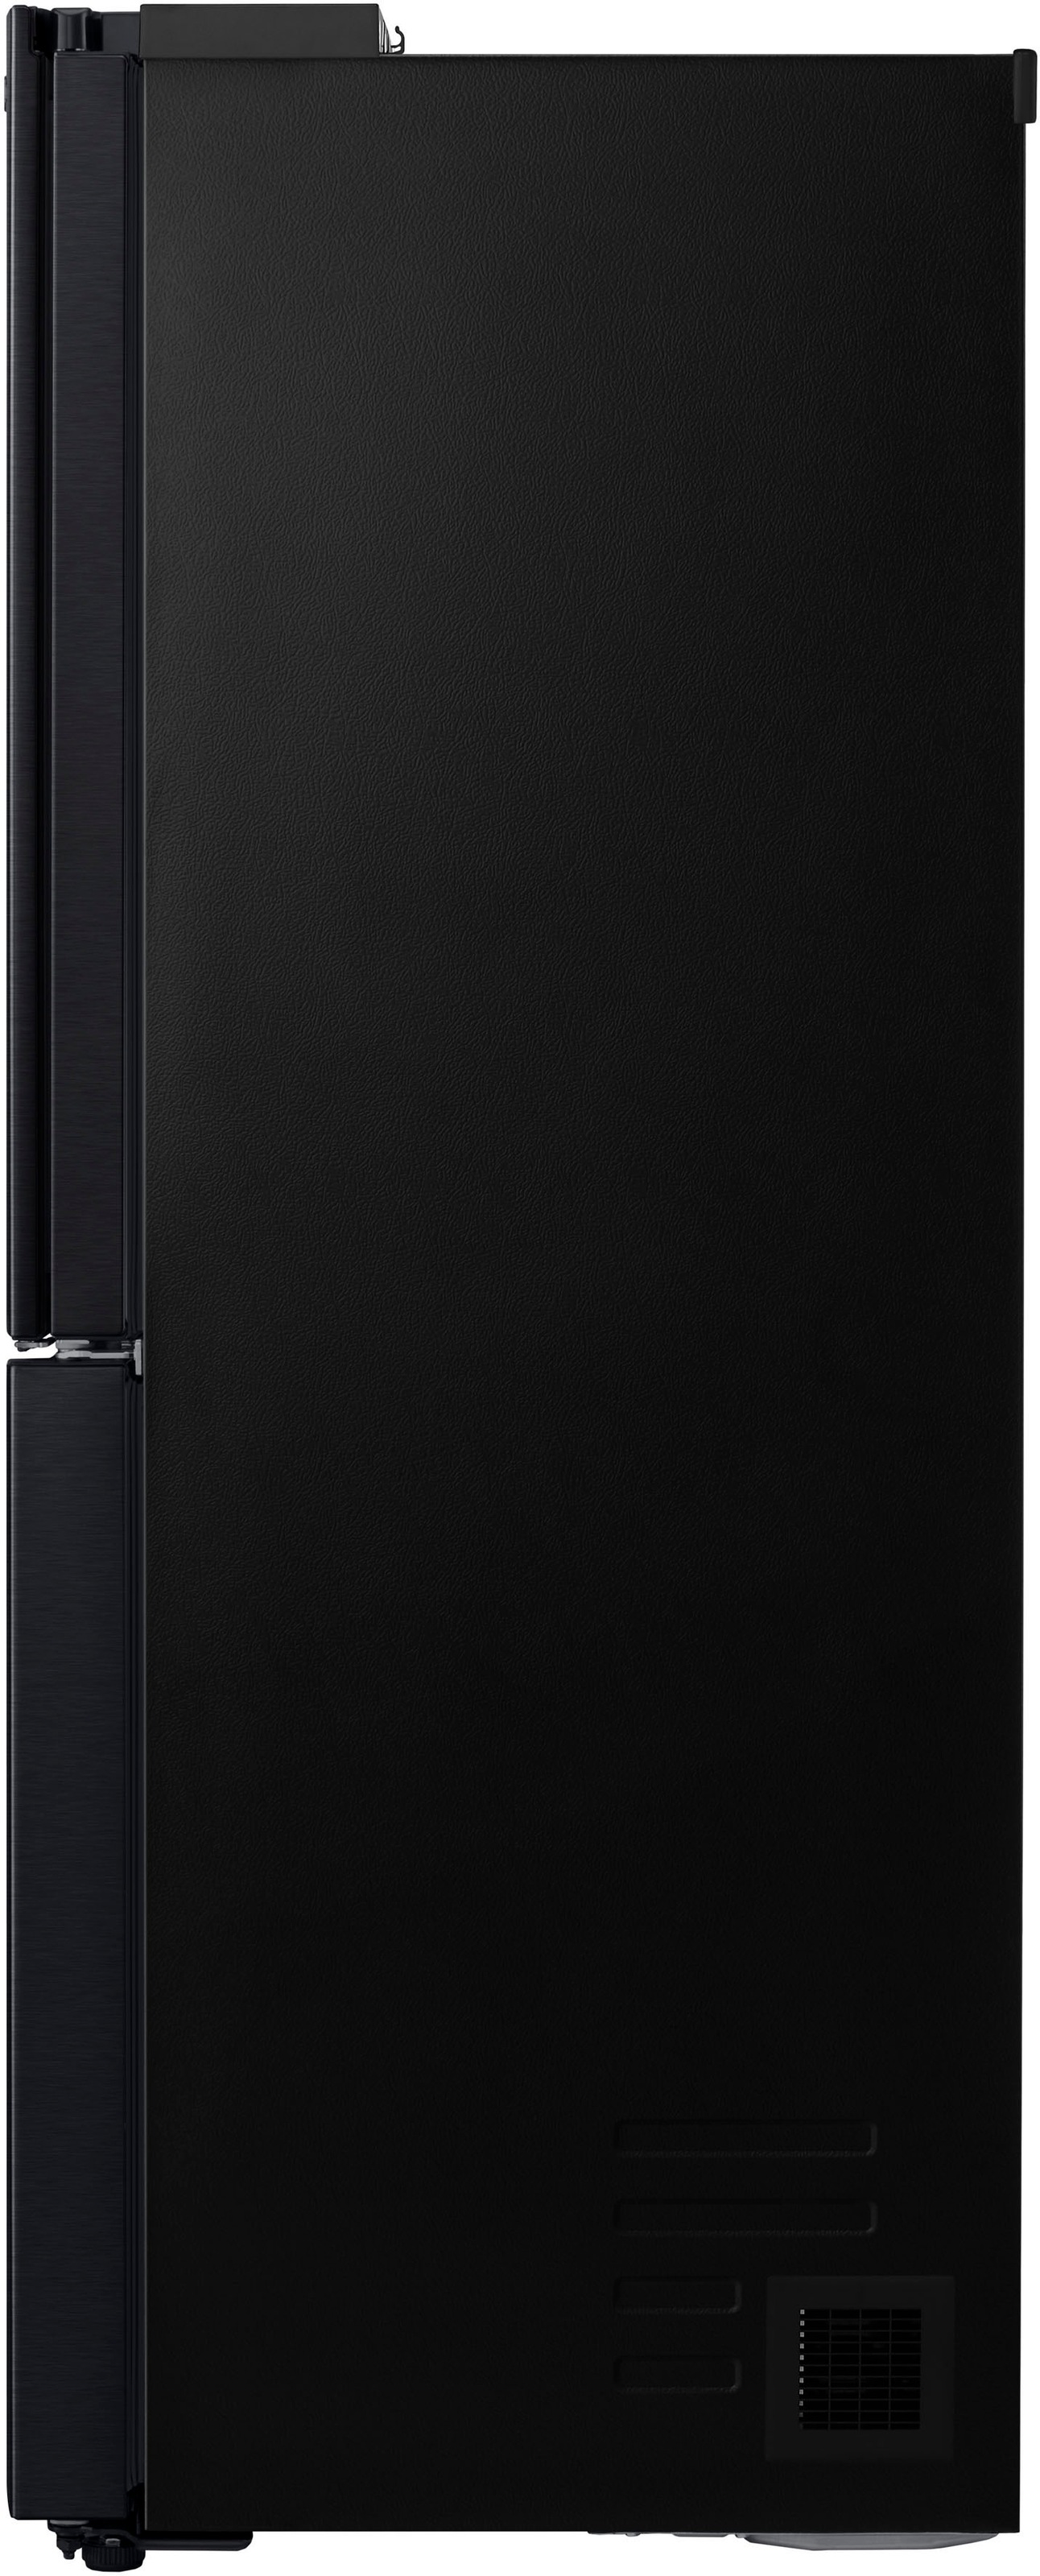 LG Multi Door, GMX945MC9F, 179,3 cm hoch, 91,2 cm breit